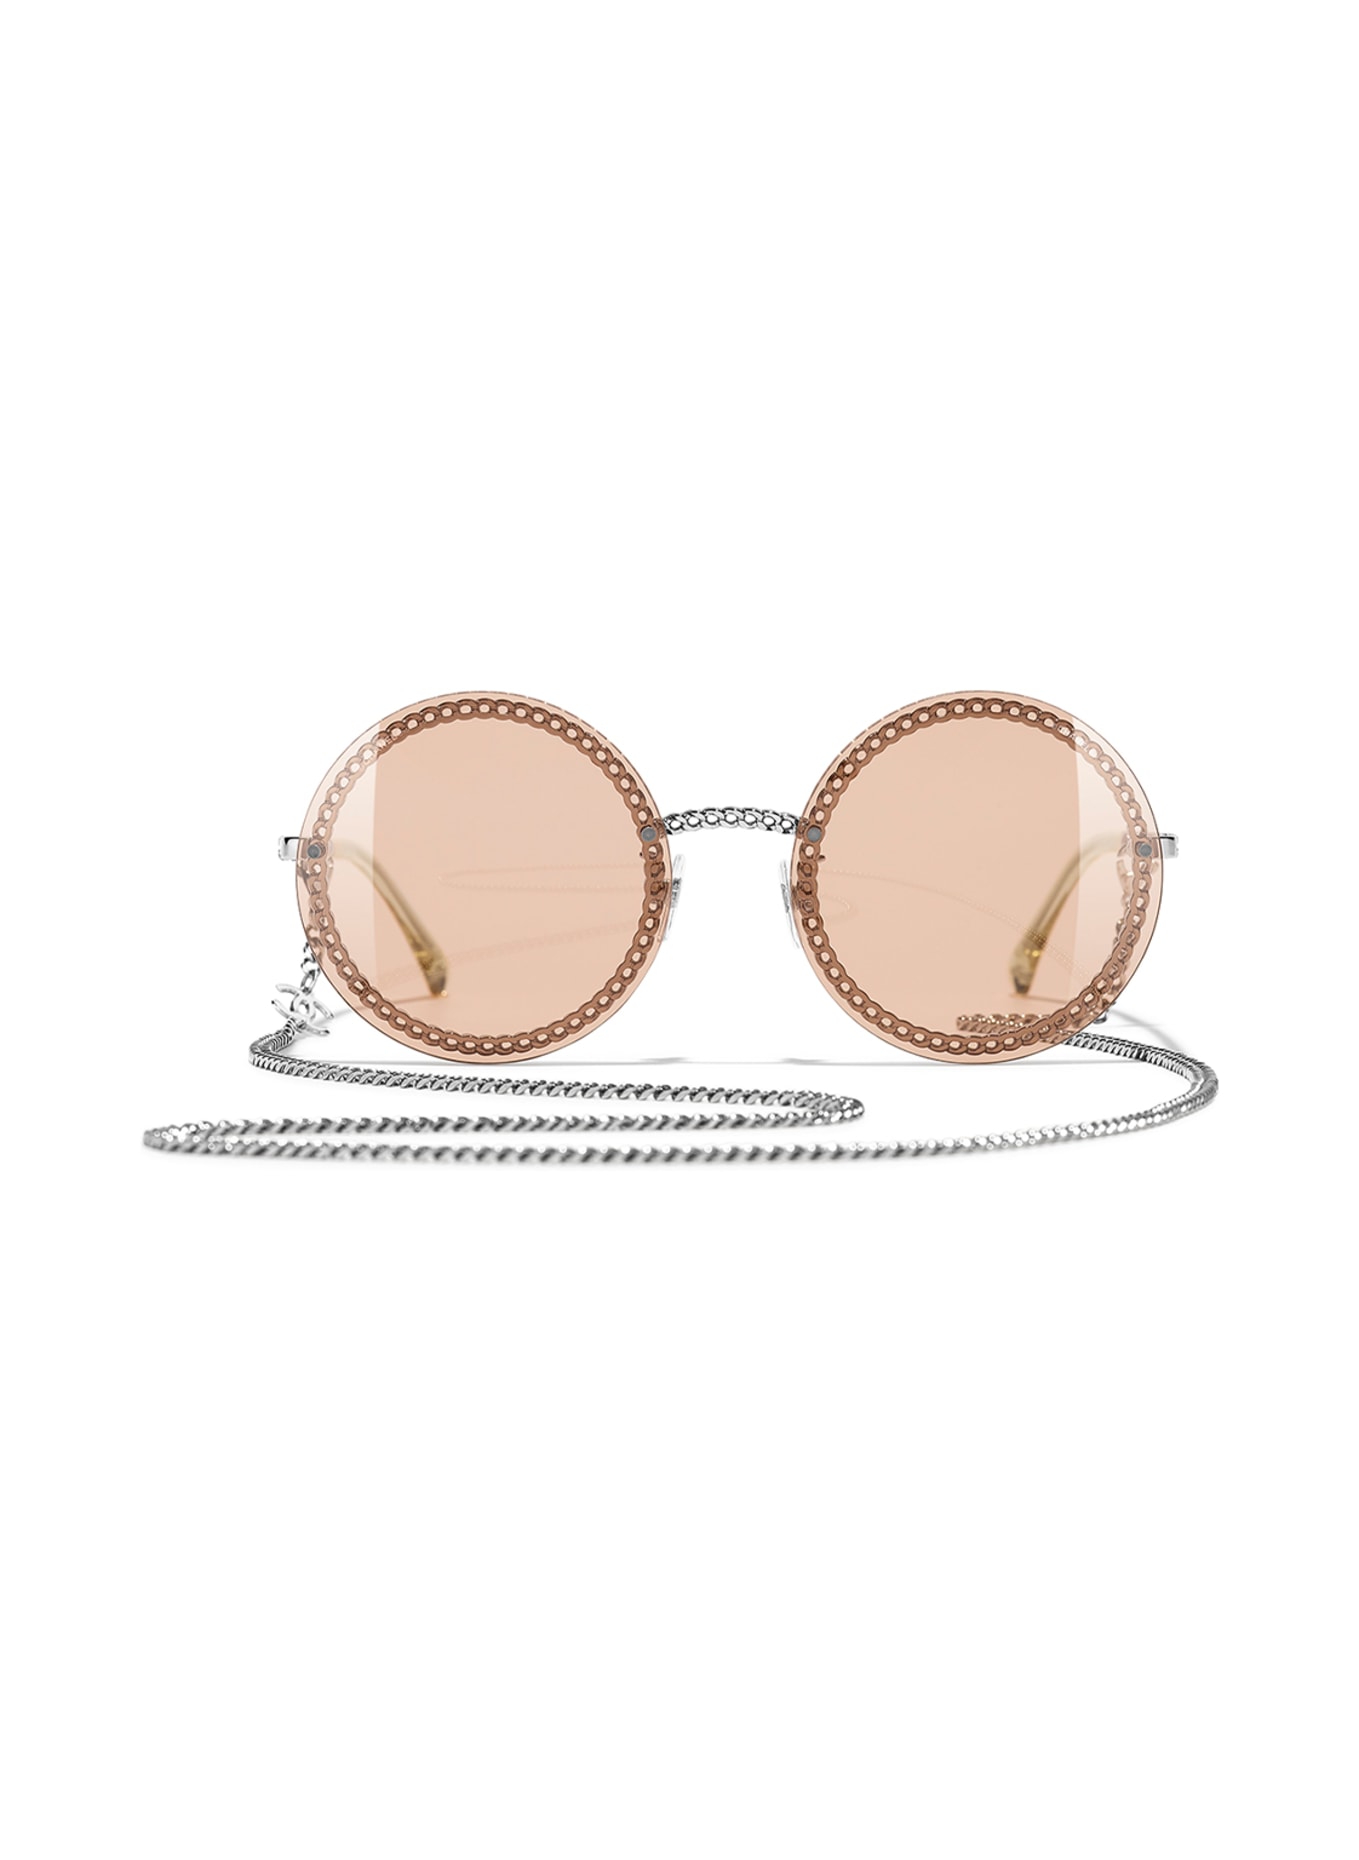 CHANEL round sunglasses  Round sunglasses, Gold chanel logo